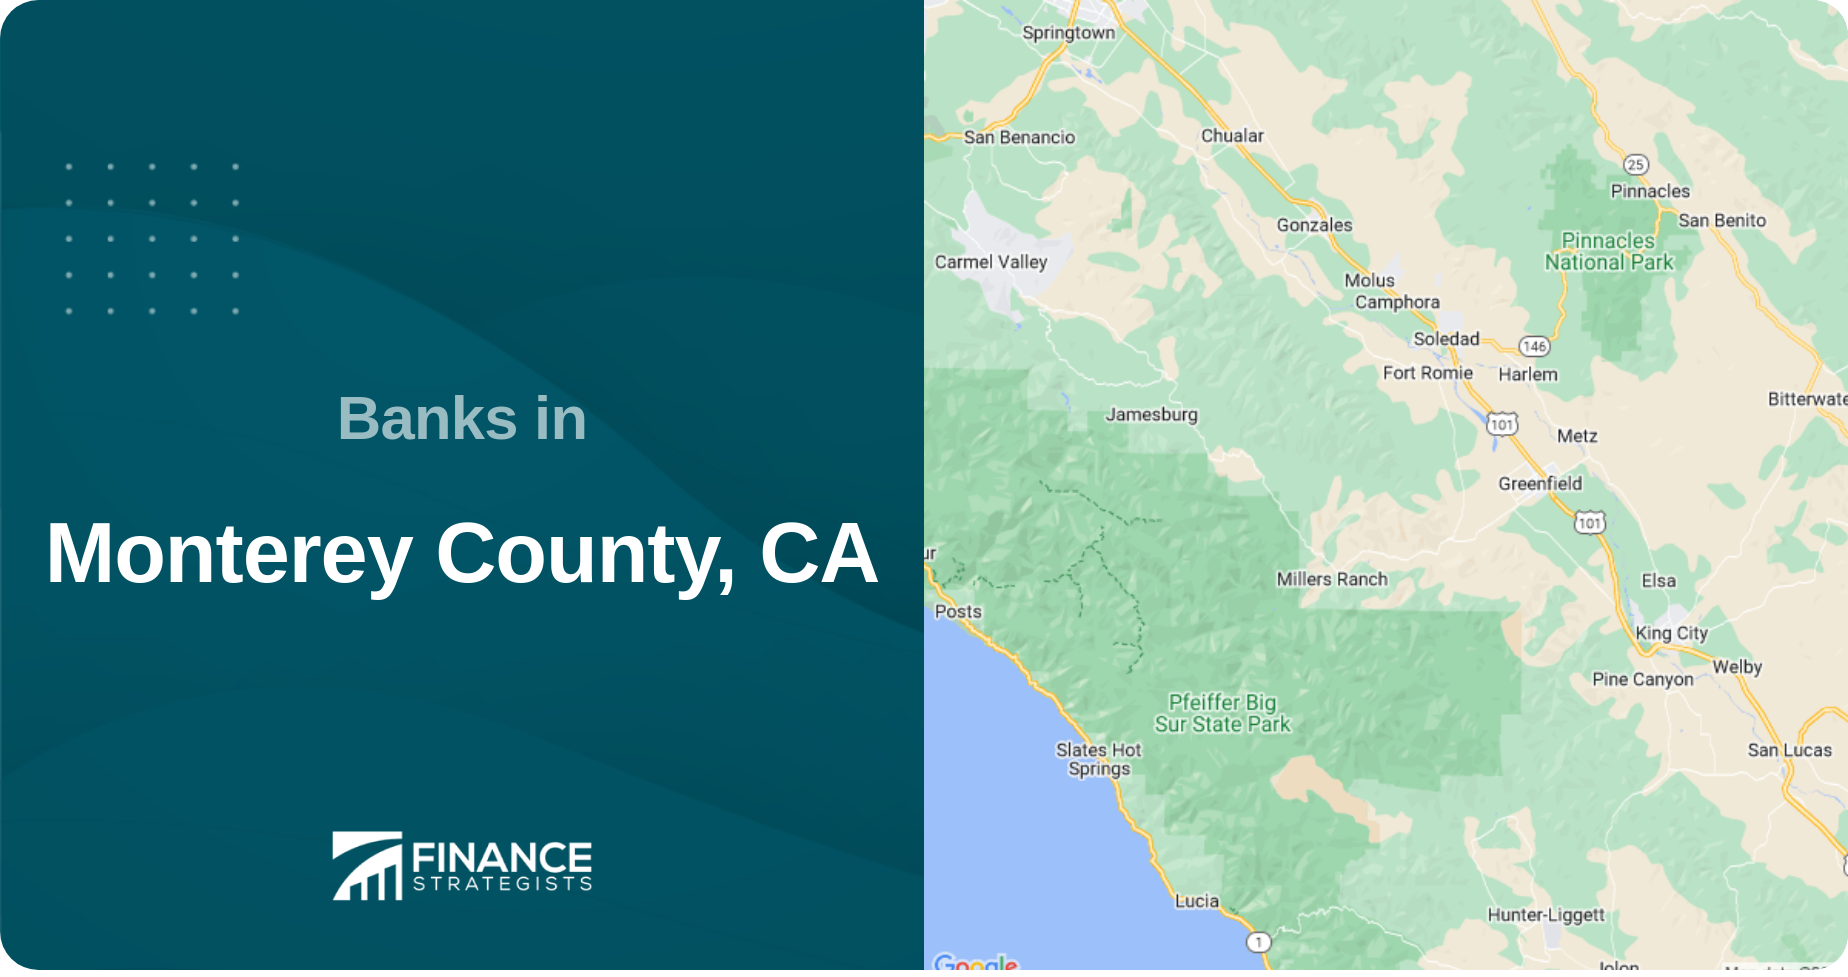 Banks in Monterey County, CA